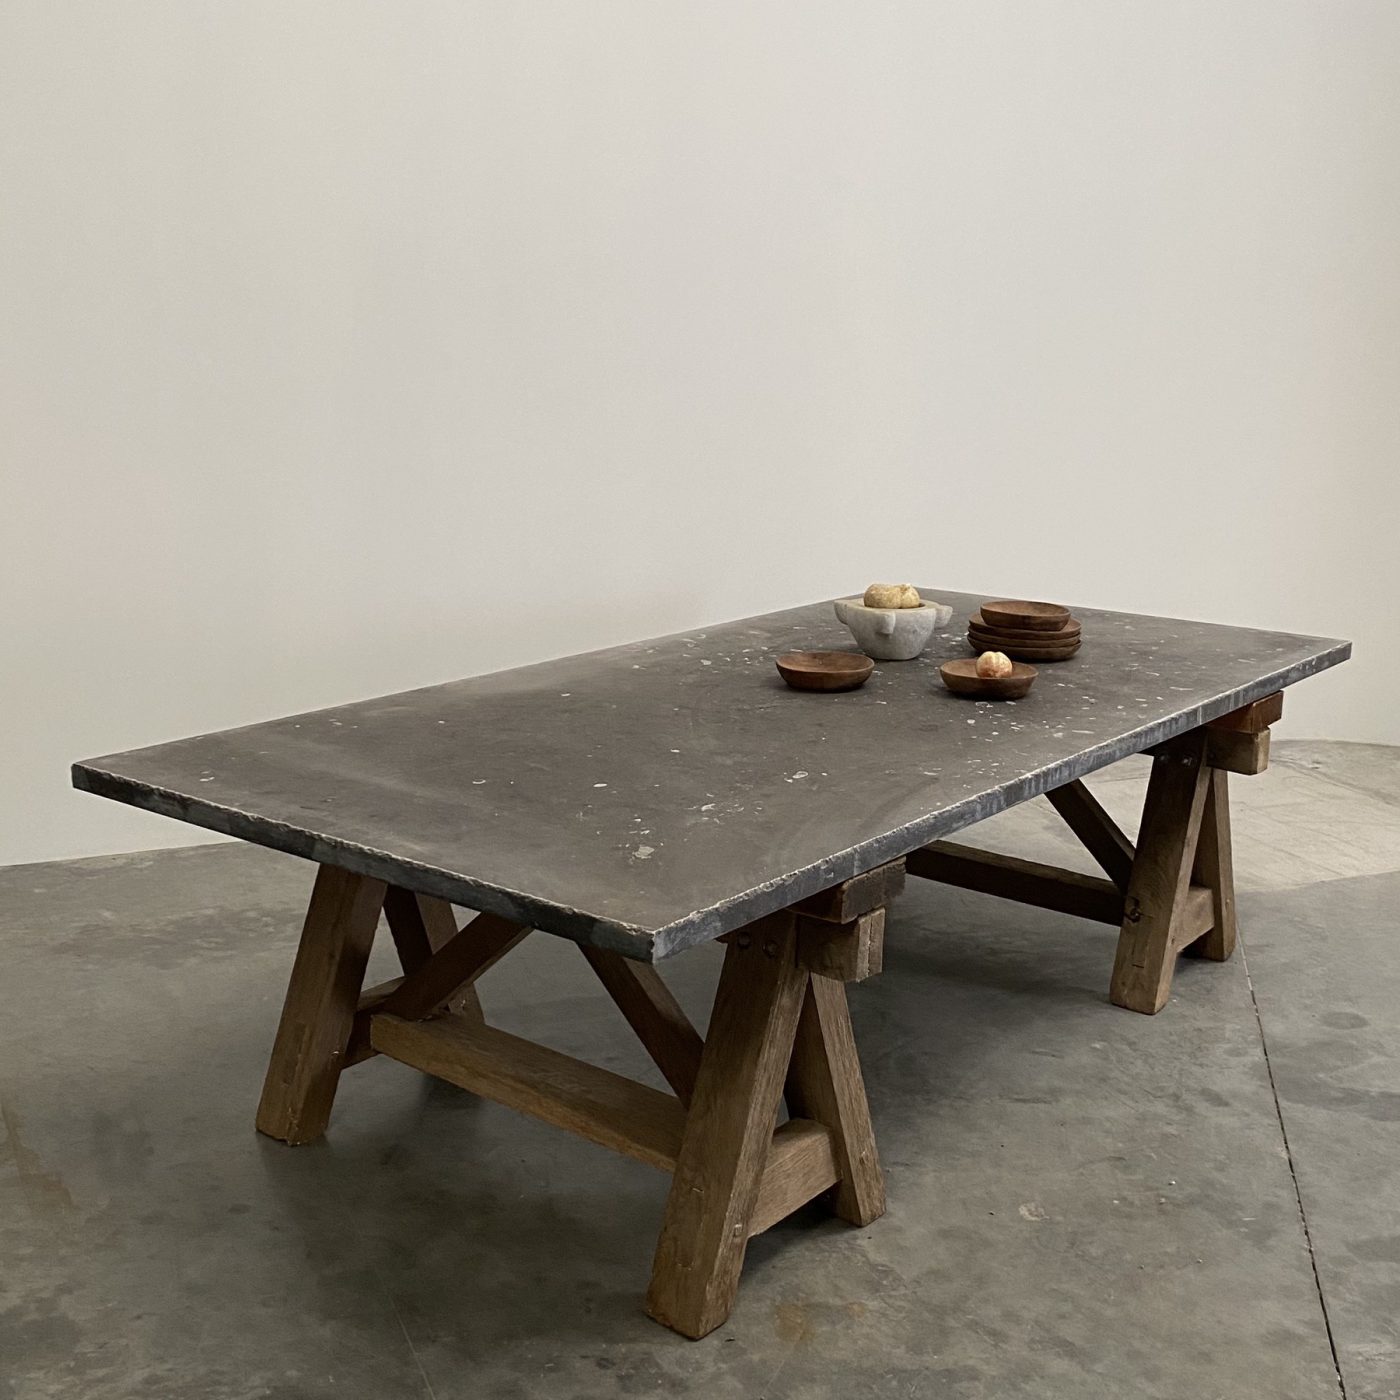 objet-vagabond-stone-table0003